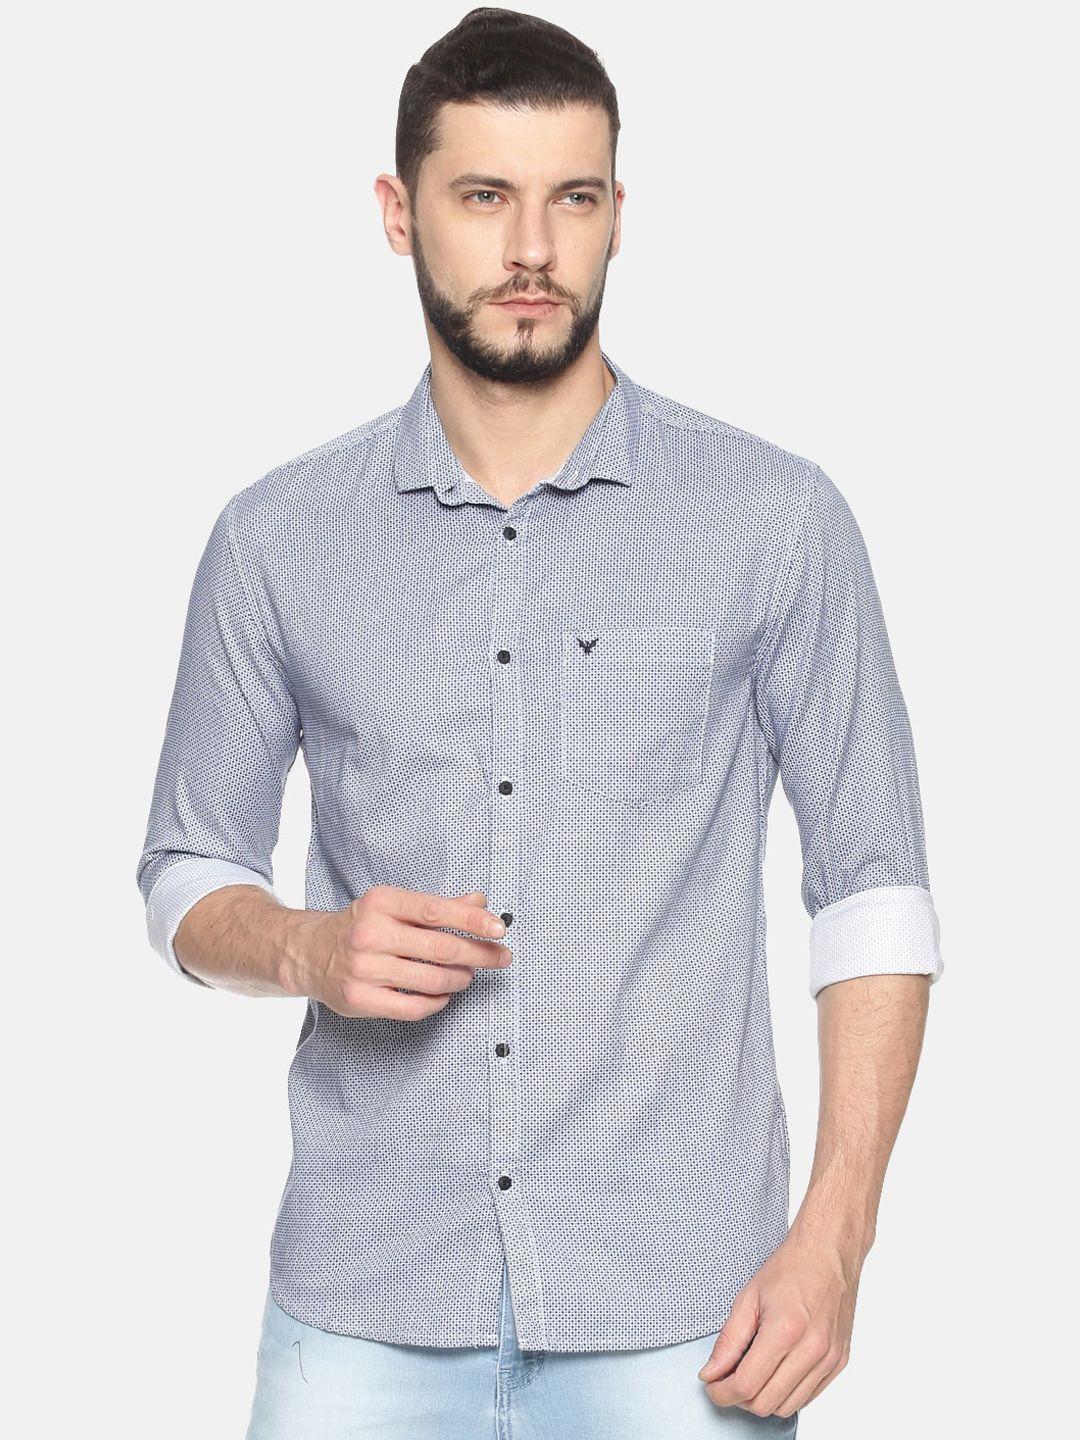 showoff-men-blue-&-white-slim-fit-printed-casual-shirt